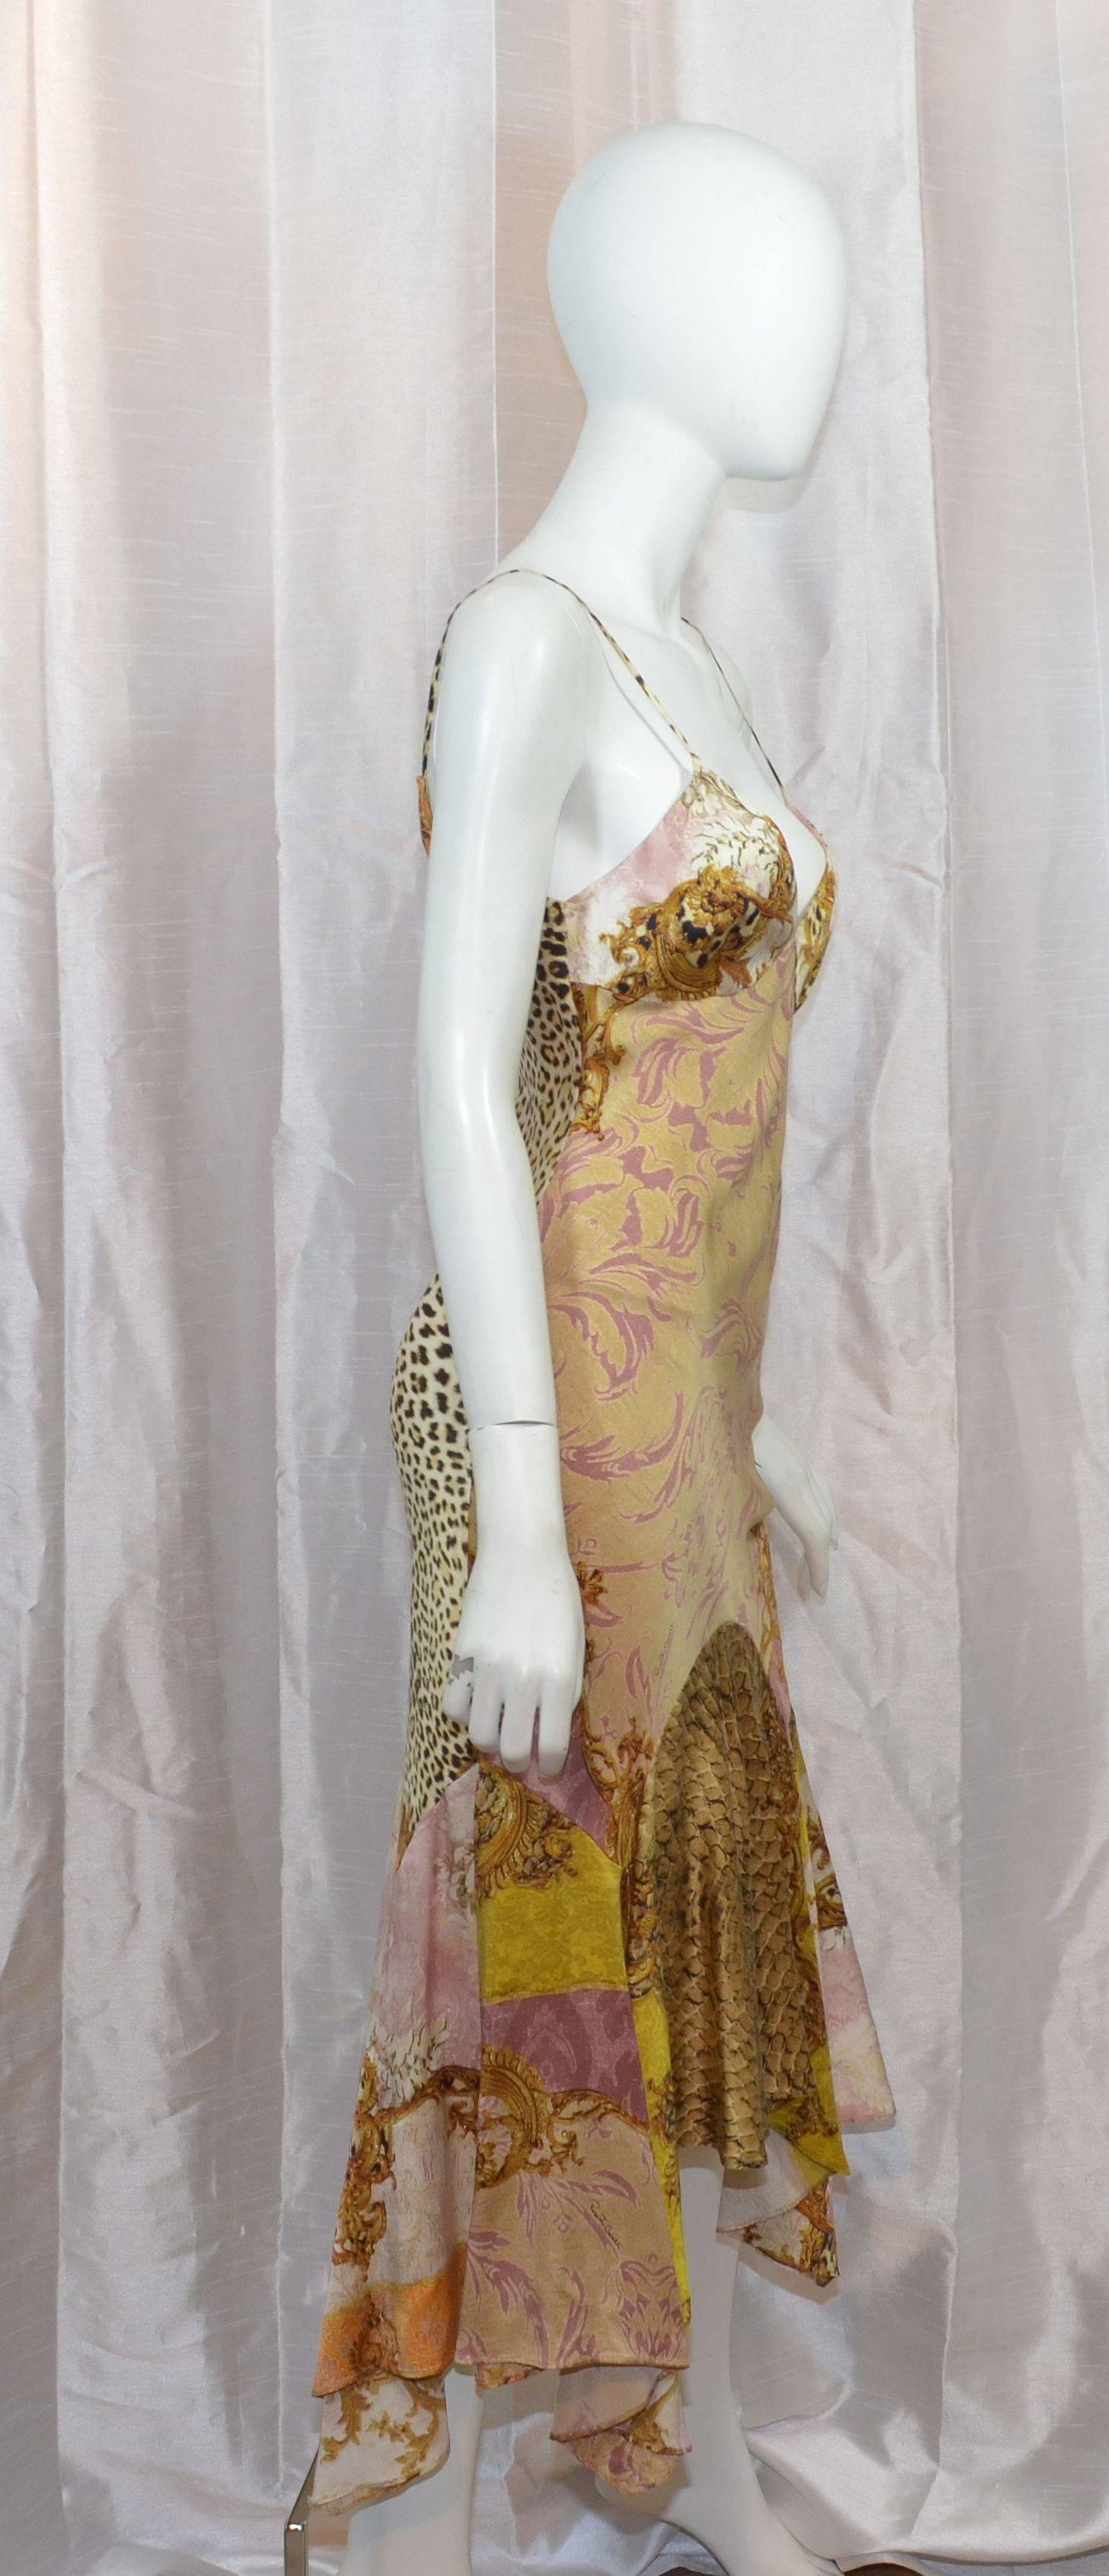 Roberto Cavalli bias cut silk dress features a mixed print throughout, handkerchief hem, 100% silk, labeled size 42, made in Italy.

Measurements:
bust - 32+''
waist - 28''
hips - 34''
length - 41''